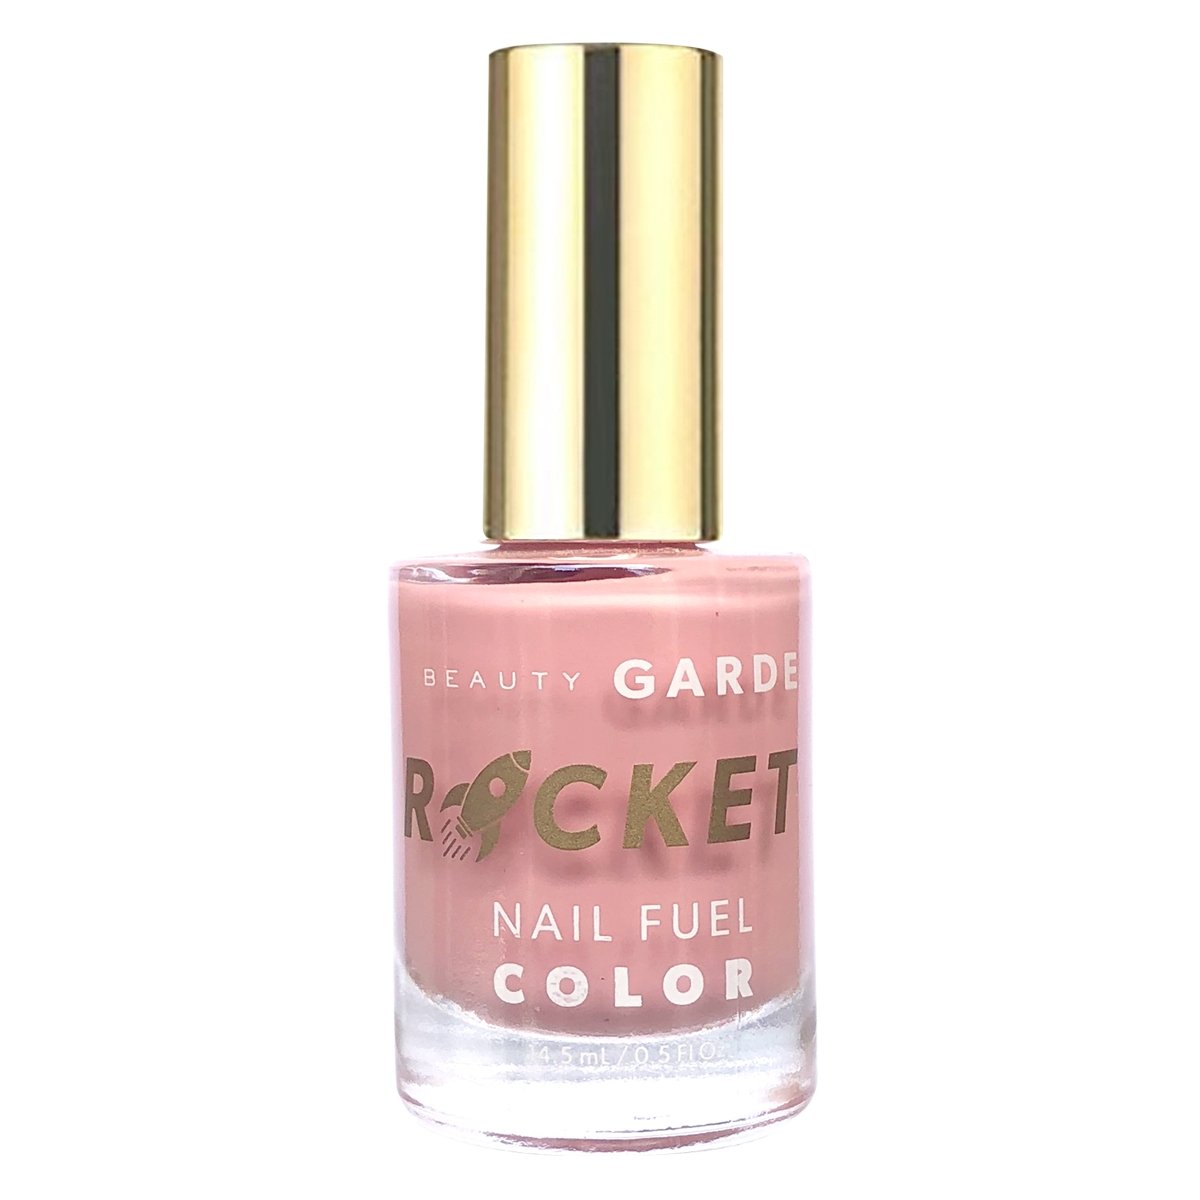 Rocket Nail Fuel Color - Dream On - BeautyGARDE